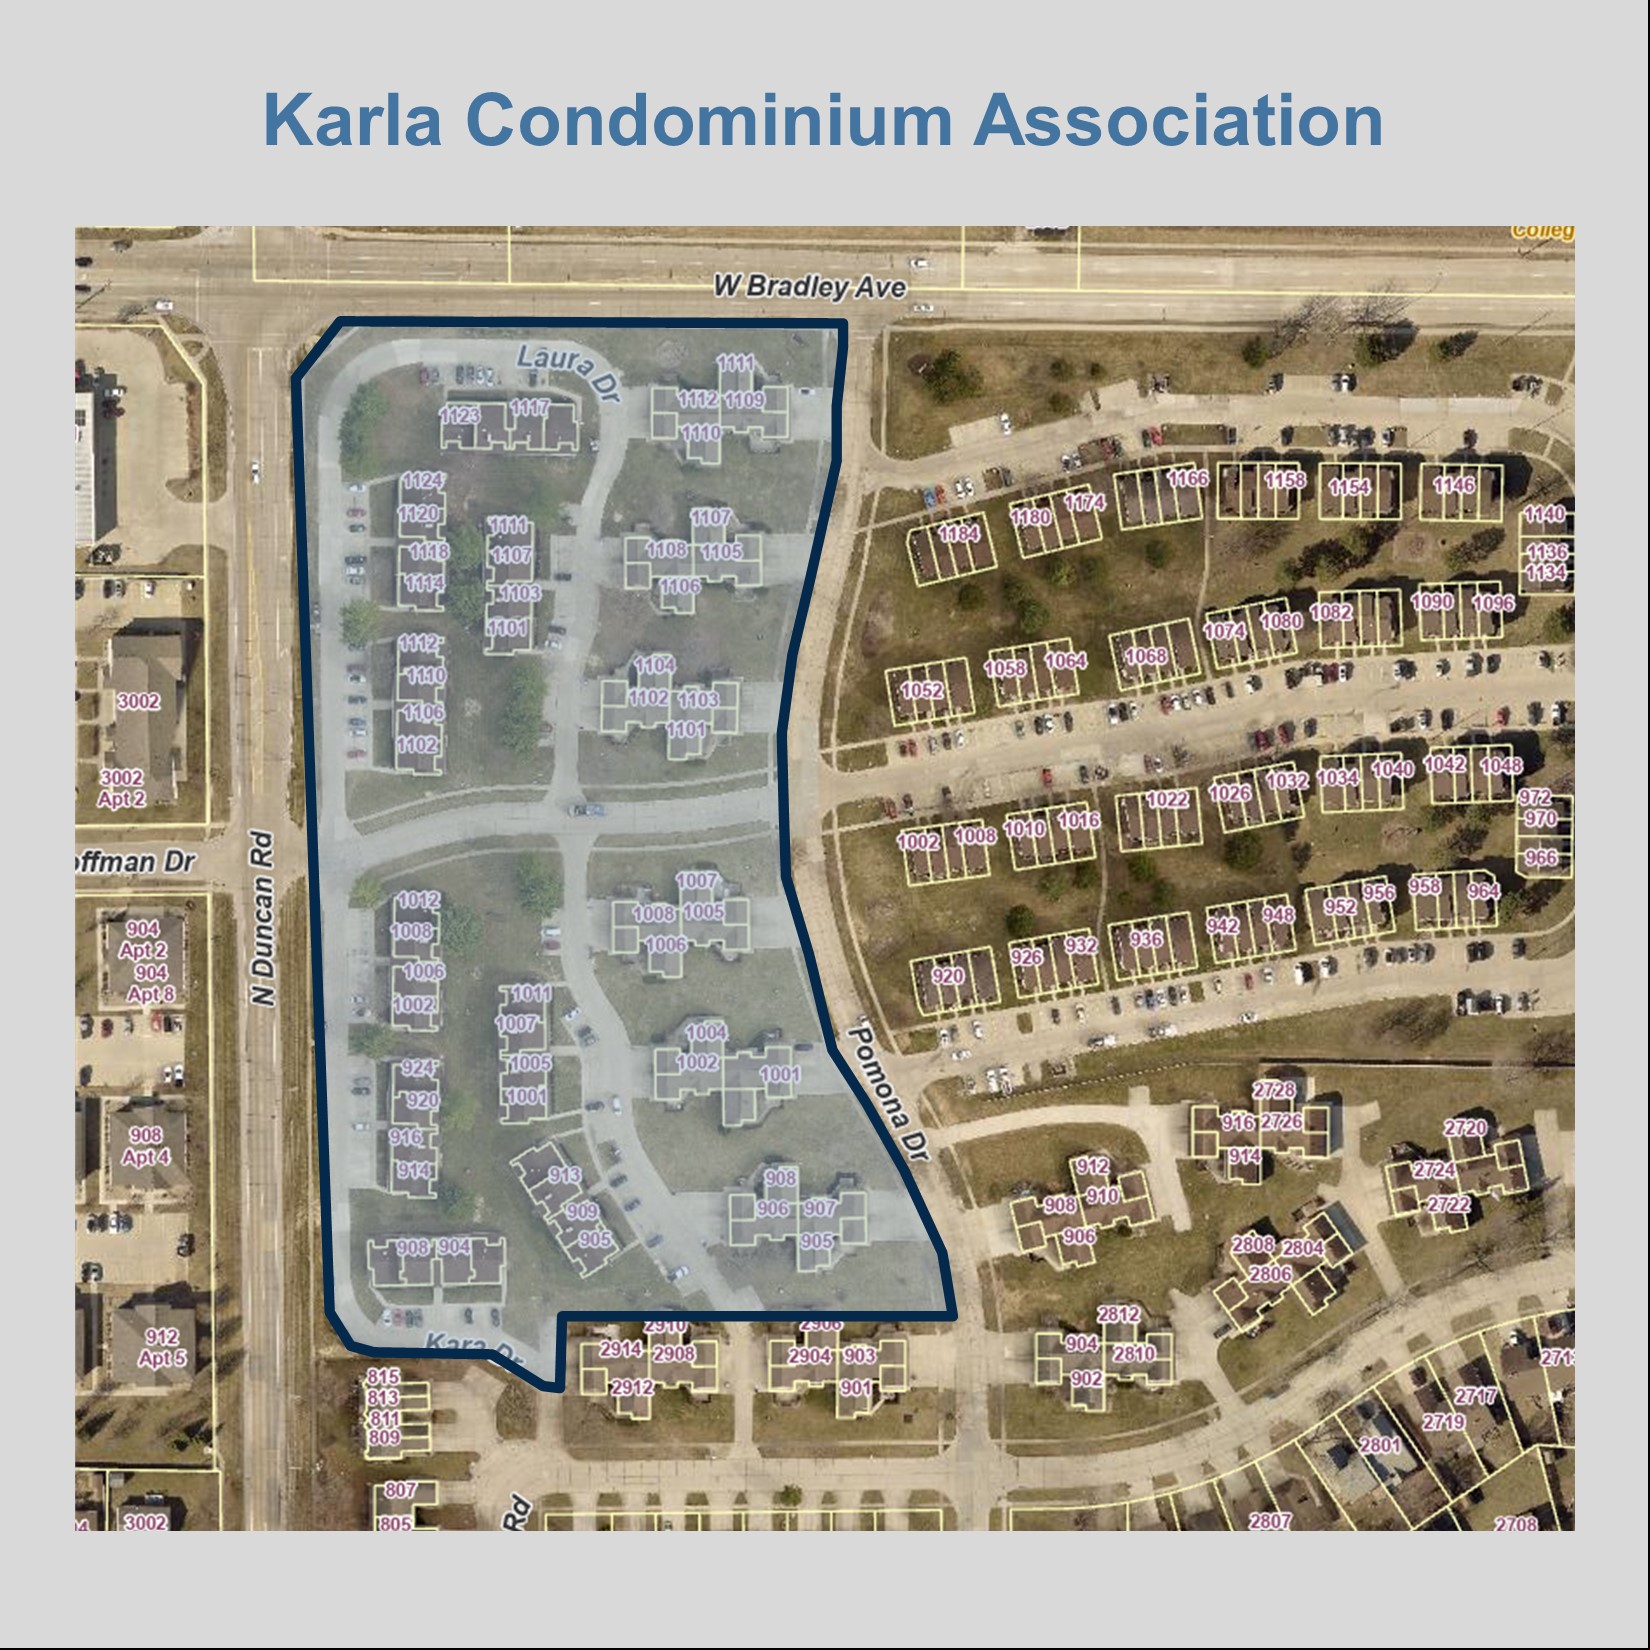 Karla Condominium Association Group Boundaries